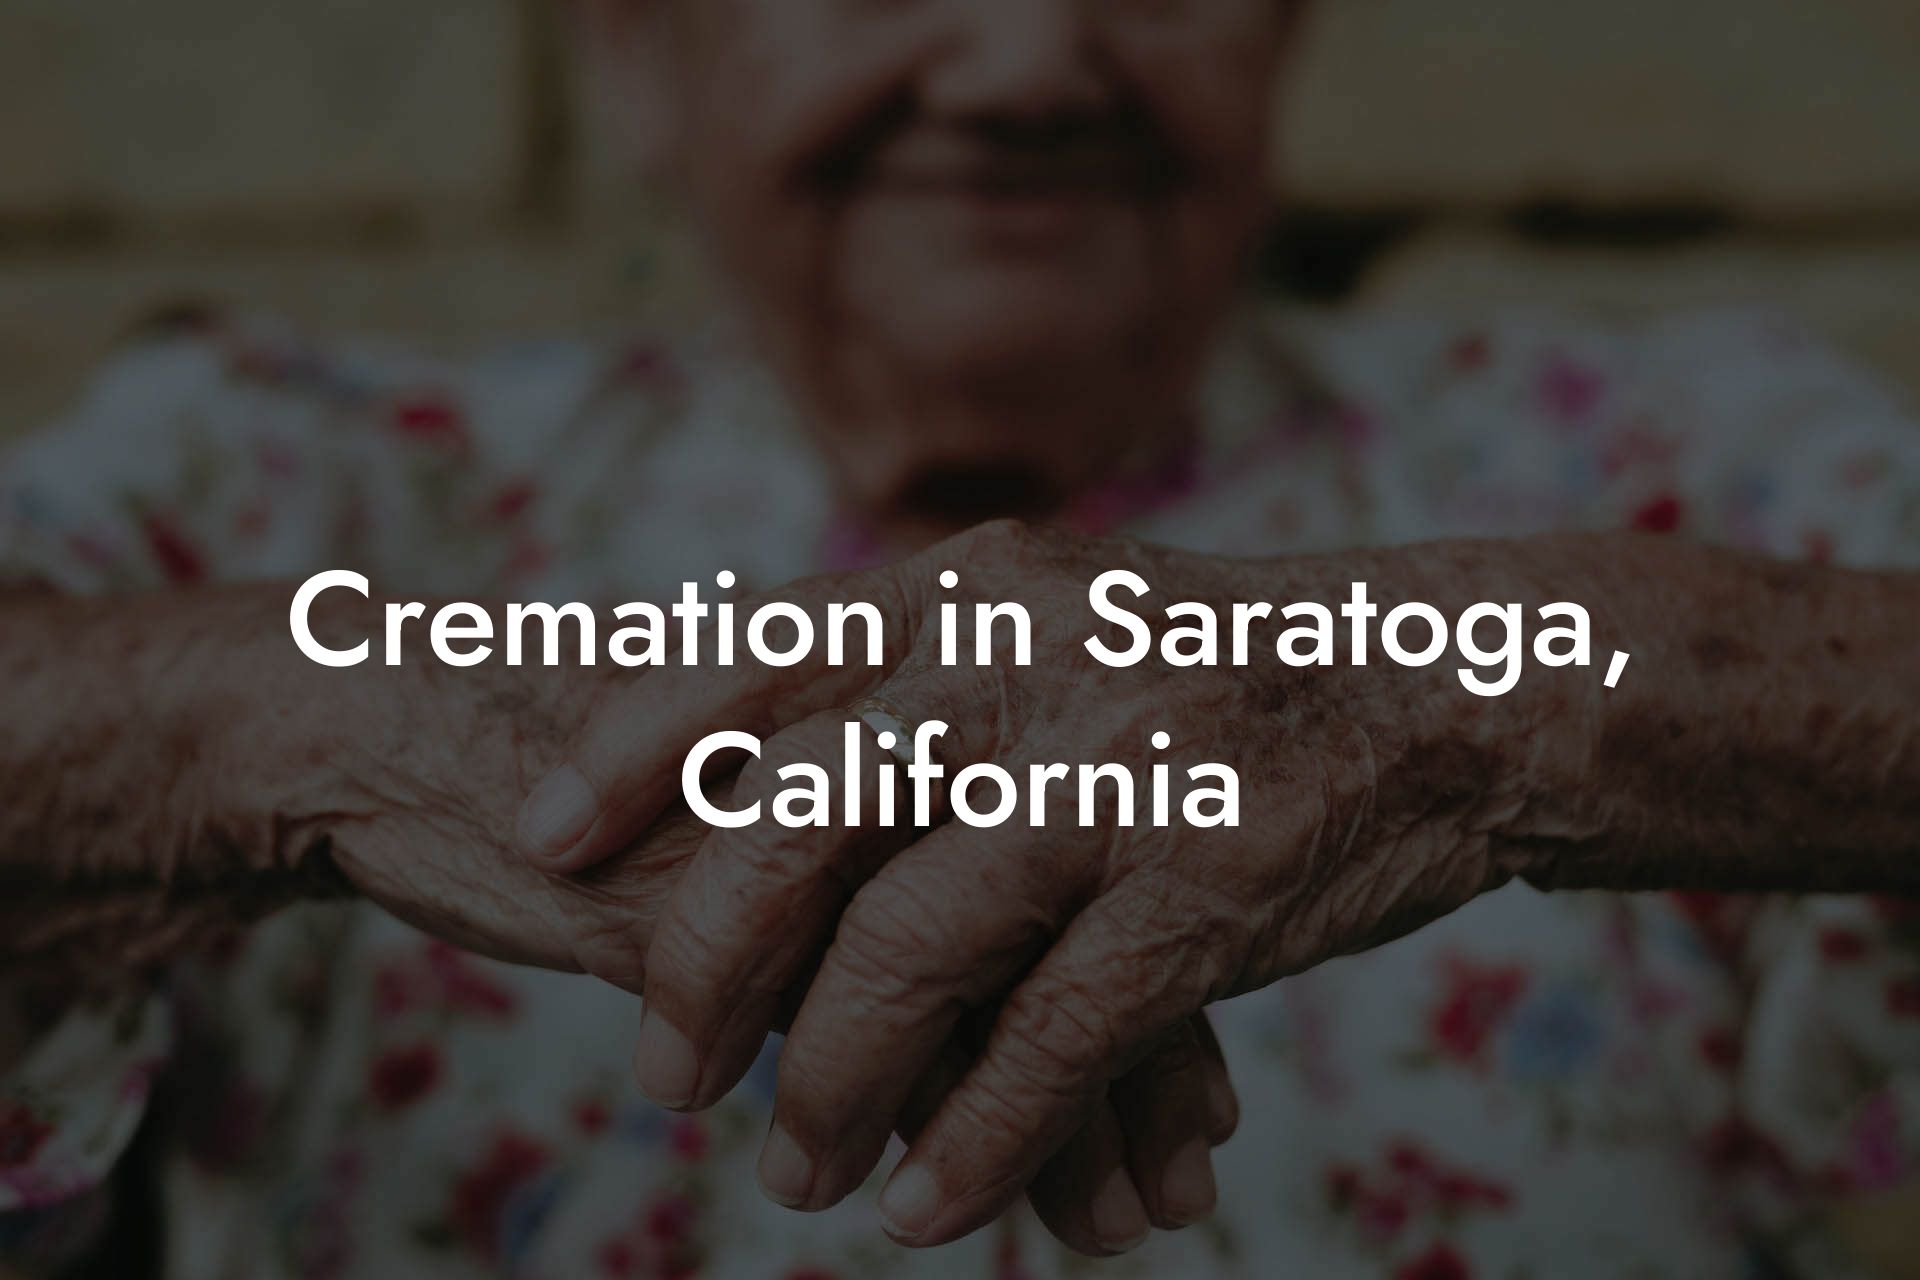 Cremation in Saratoga, California